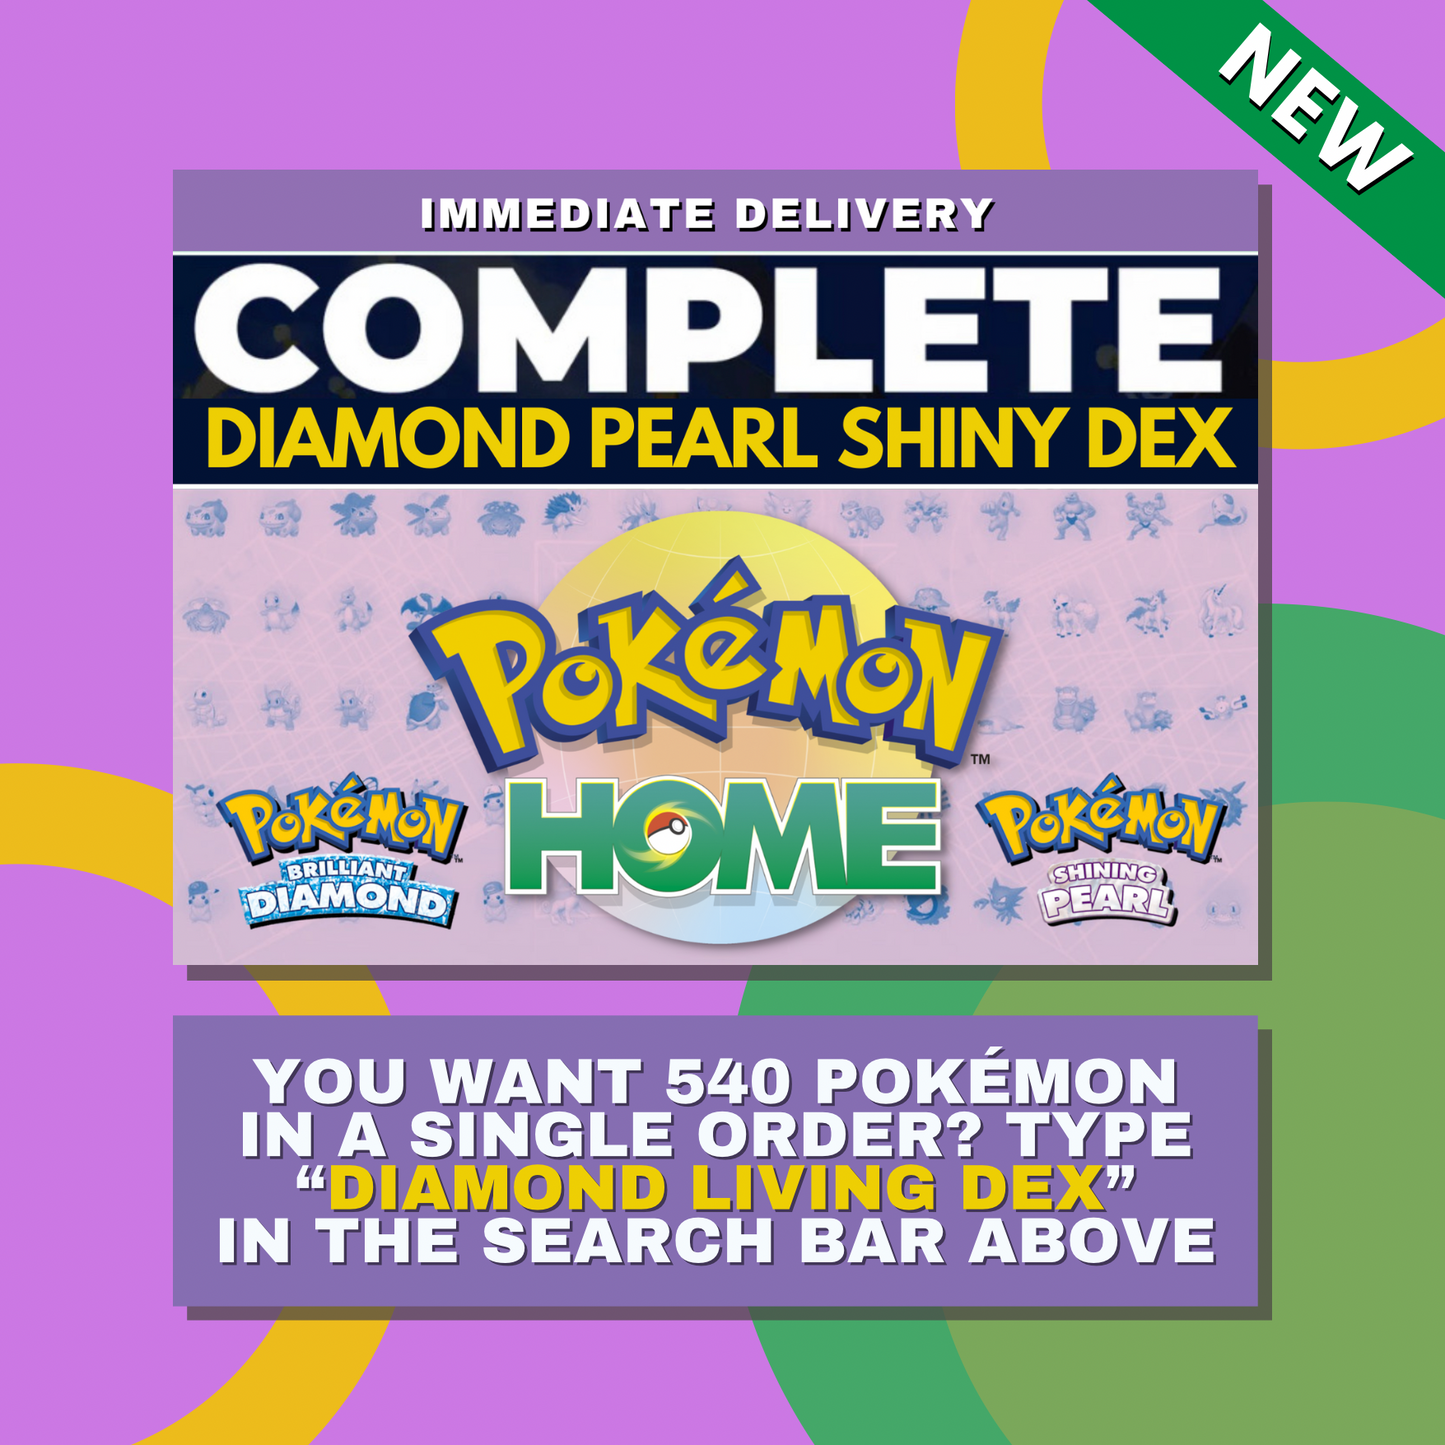 Politoed Shiny ✨ or Non Shiny Pokémon Brilliant Diamond Shining Pearl Battle Ready 6 IV Competitive 100% Legit Level 100 Customizable Custom OT by Shiny Living Dex | Shiny Living Dex